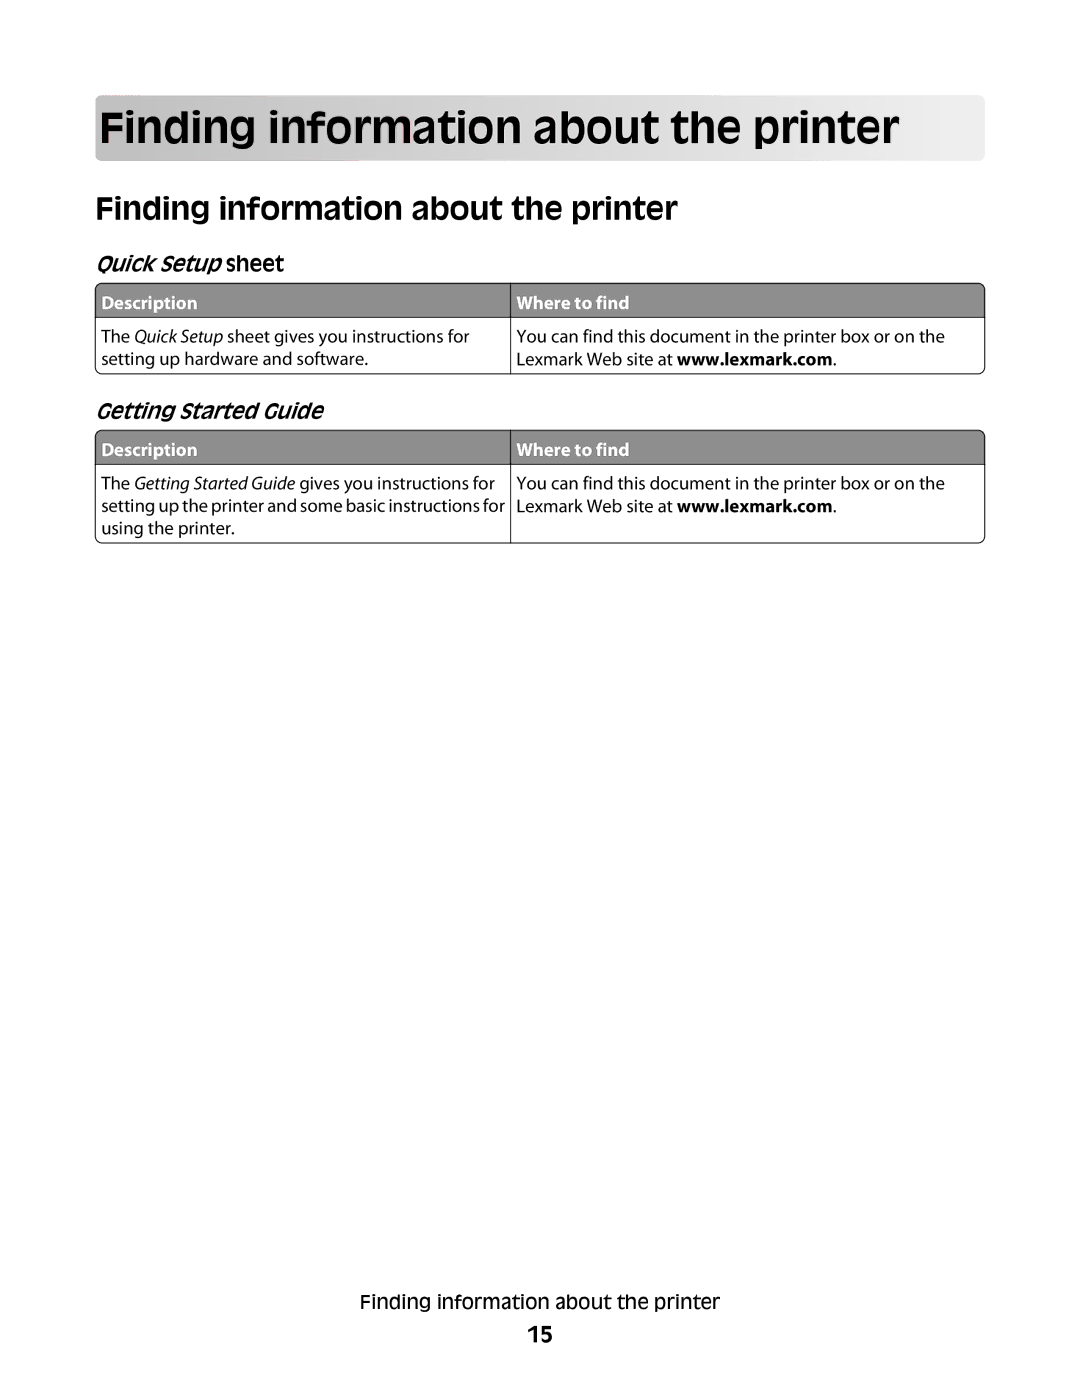 Lexmark 9500 Series manual Finding info rma tion about the p rinter, Finding information about the printer, Description 